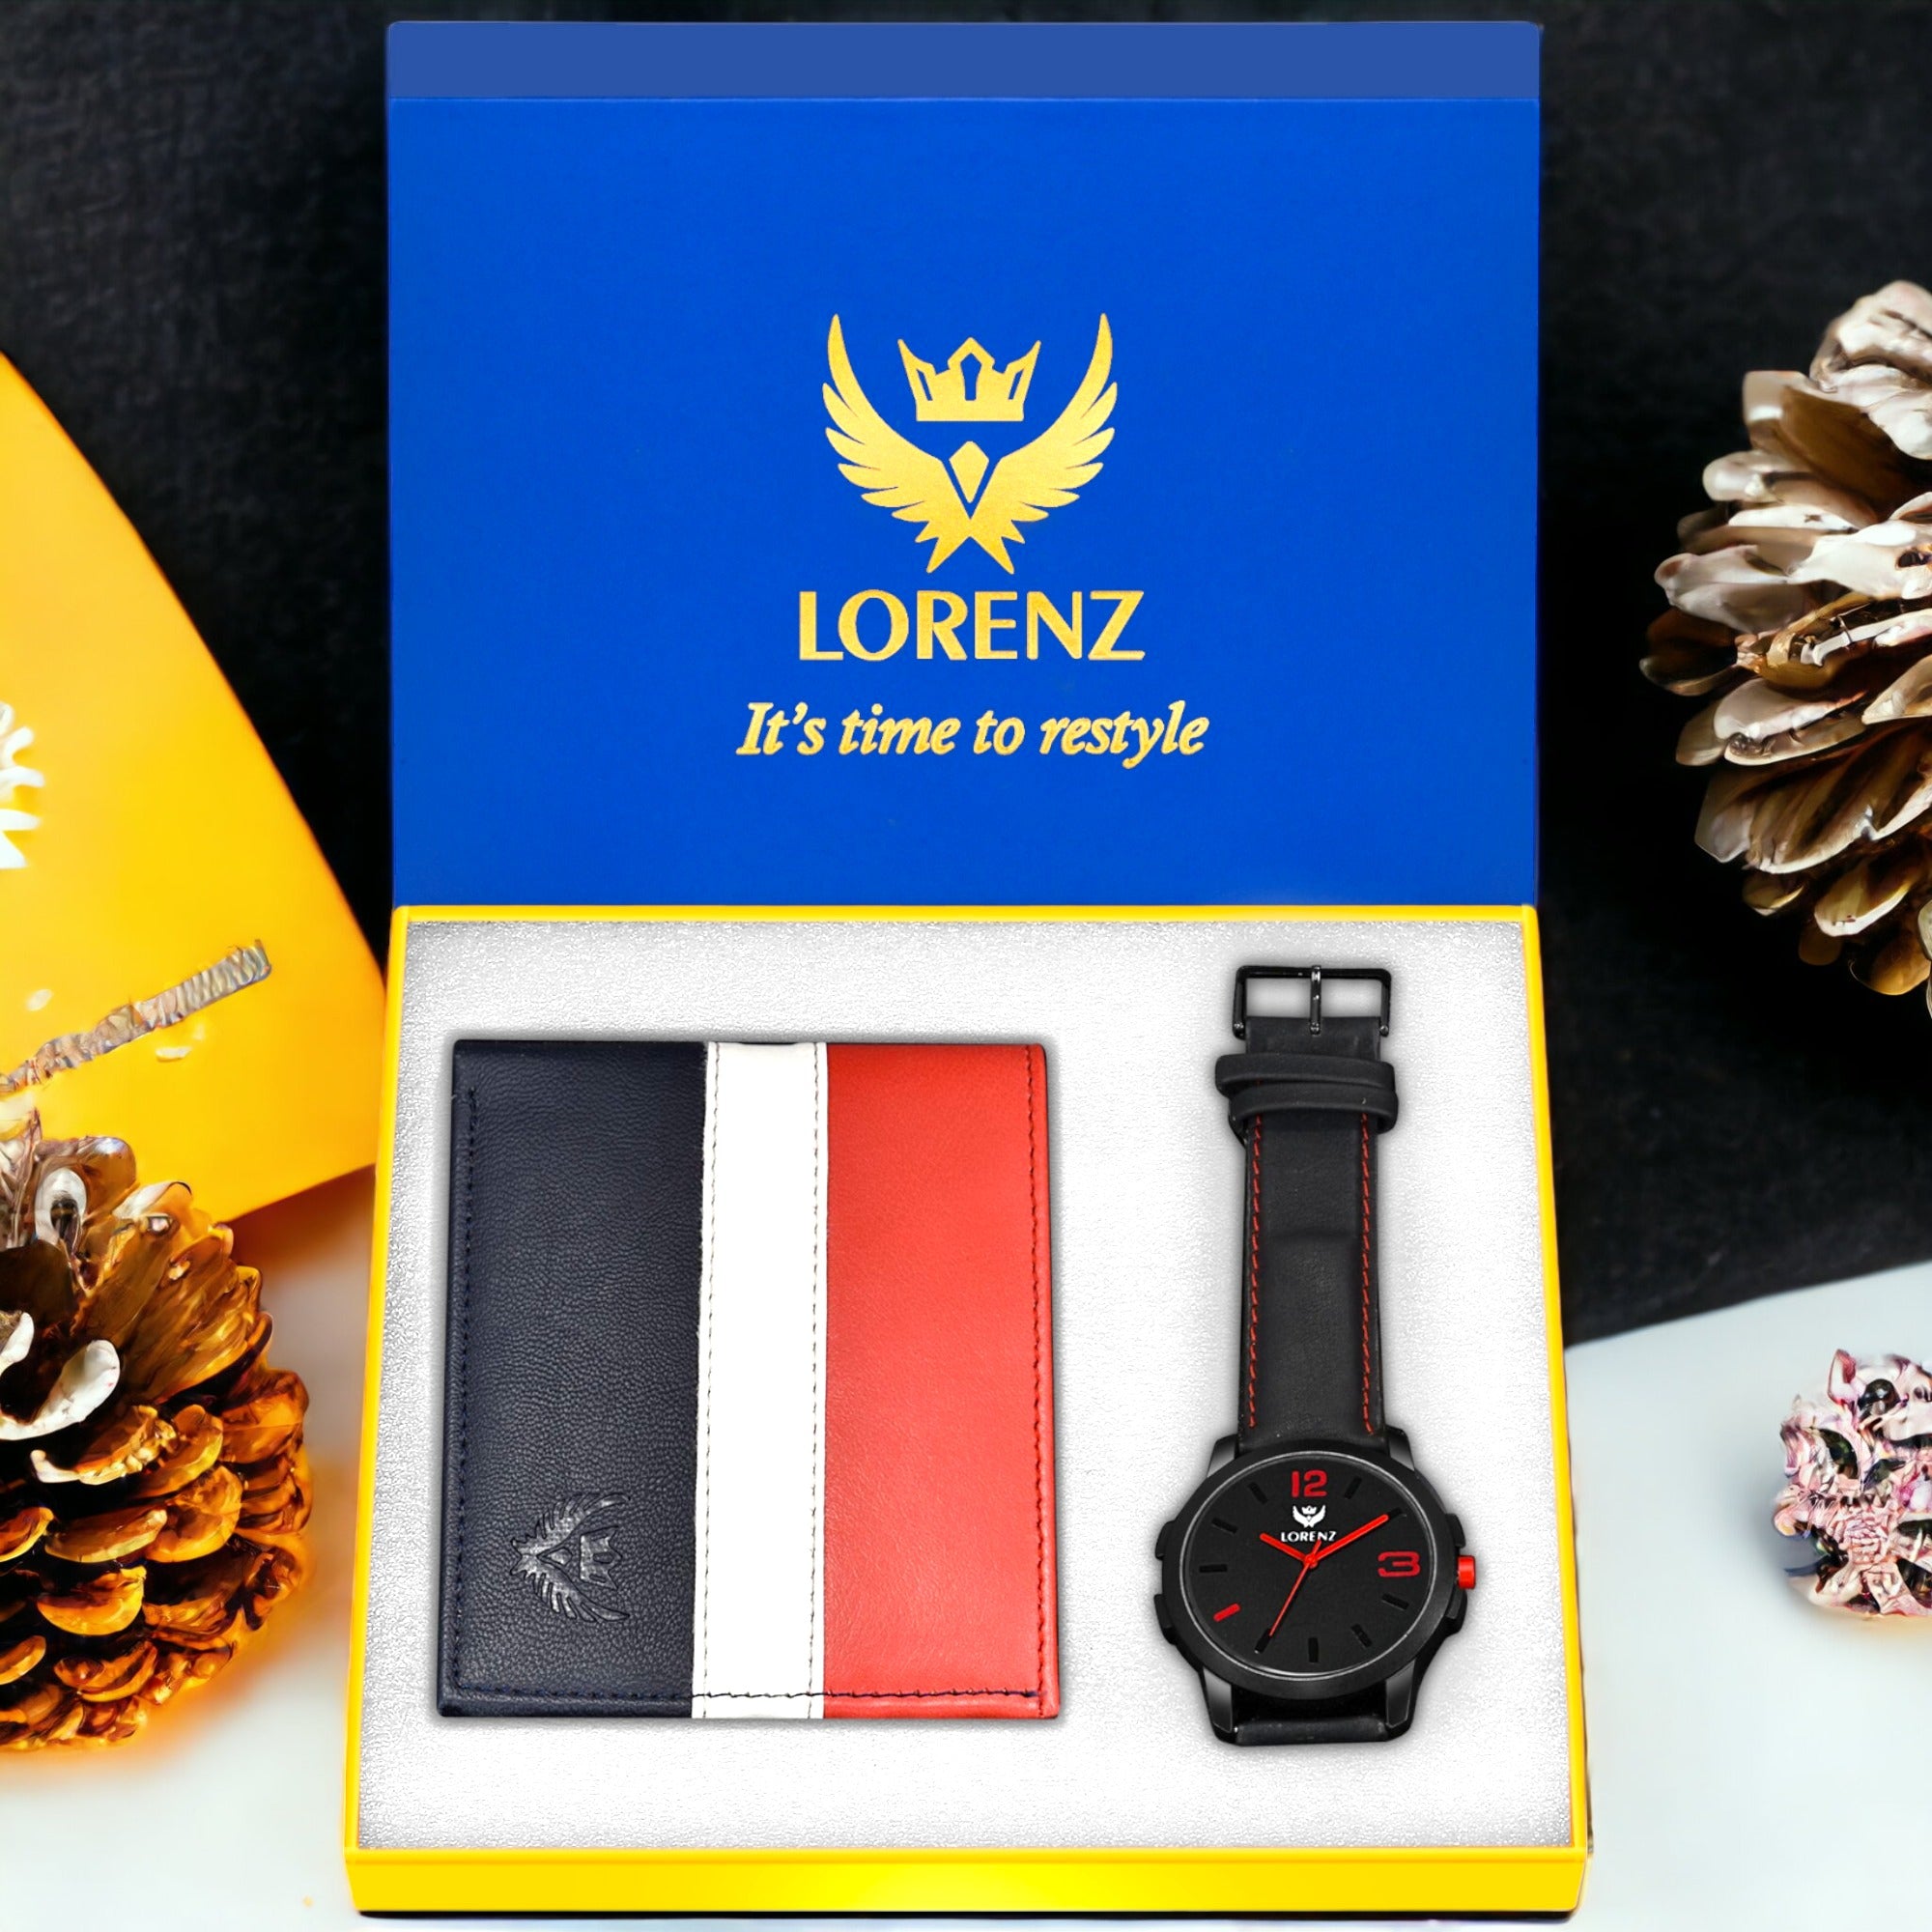 Lorenz Black Dial Watch & Multicolor Wallet Combo for Men